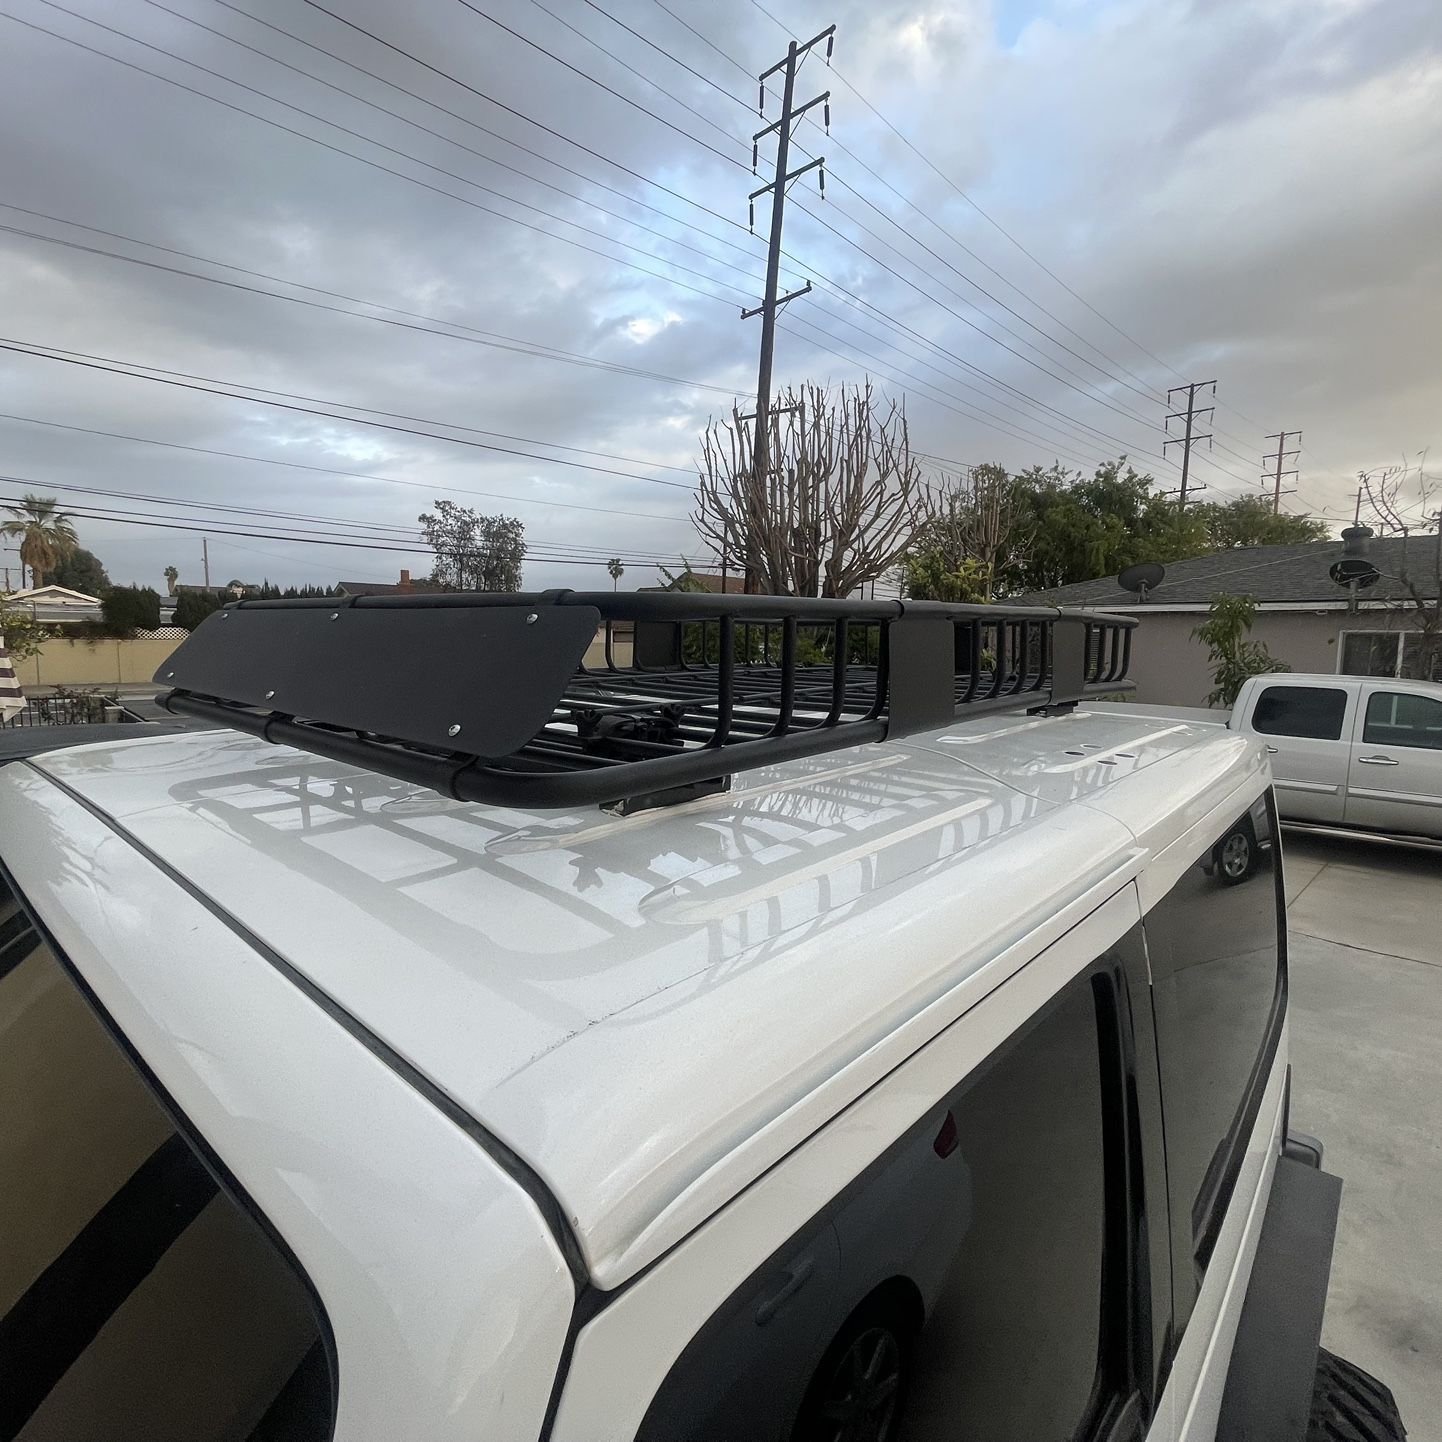 ARKSEN Roof Rack 64x39x6 for Sale in Anaheim, CA OfferUp